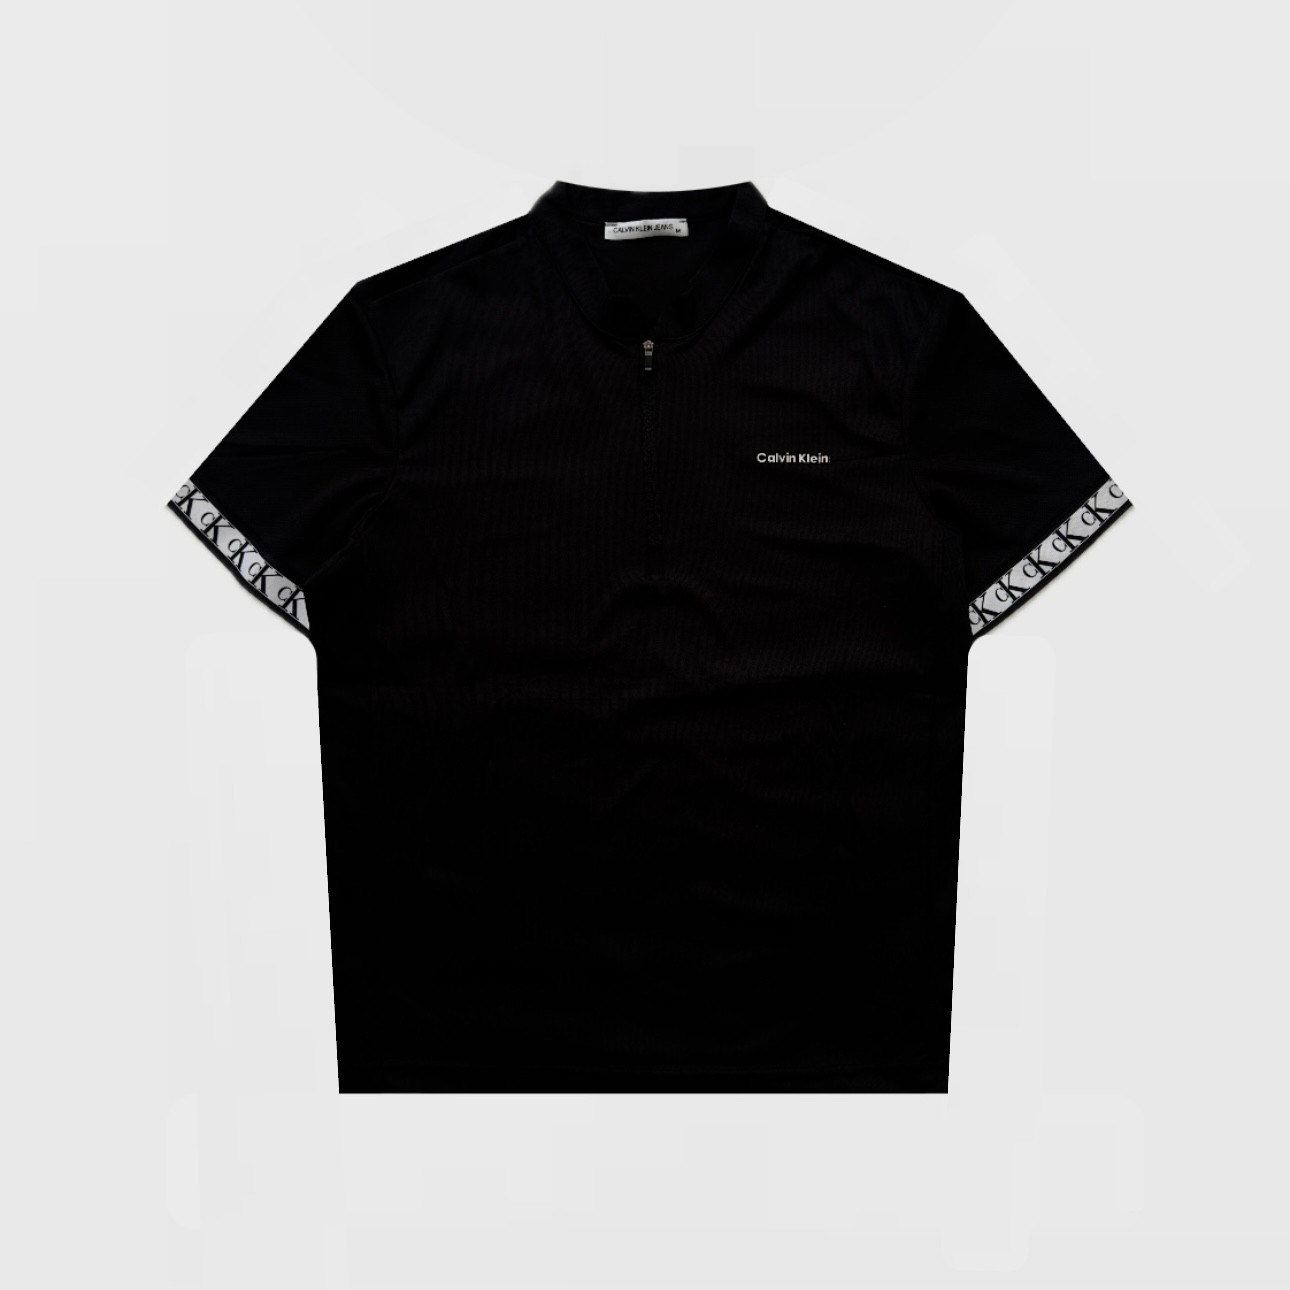 CK Fermuarlı Yakalı Seamless T-Shirt - Siyah